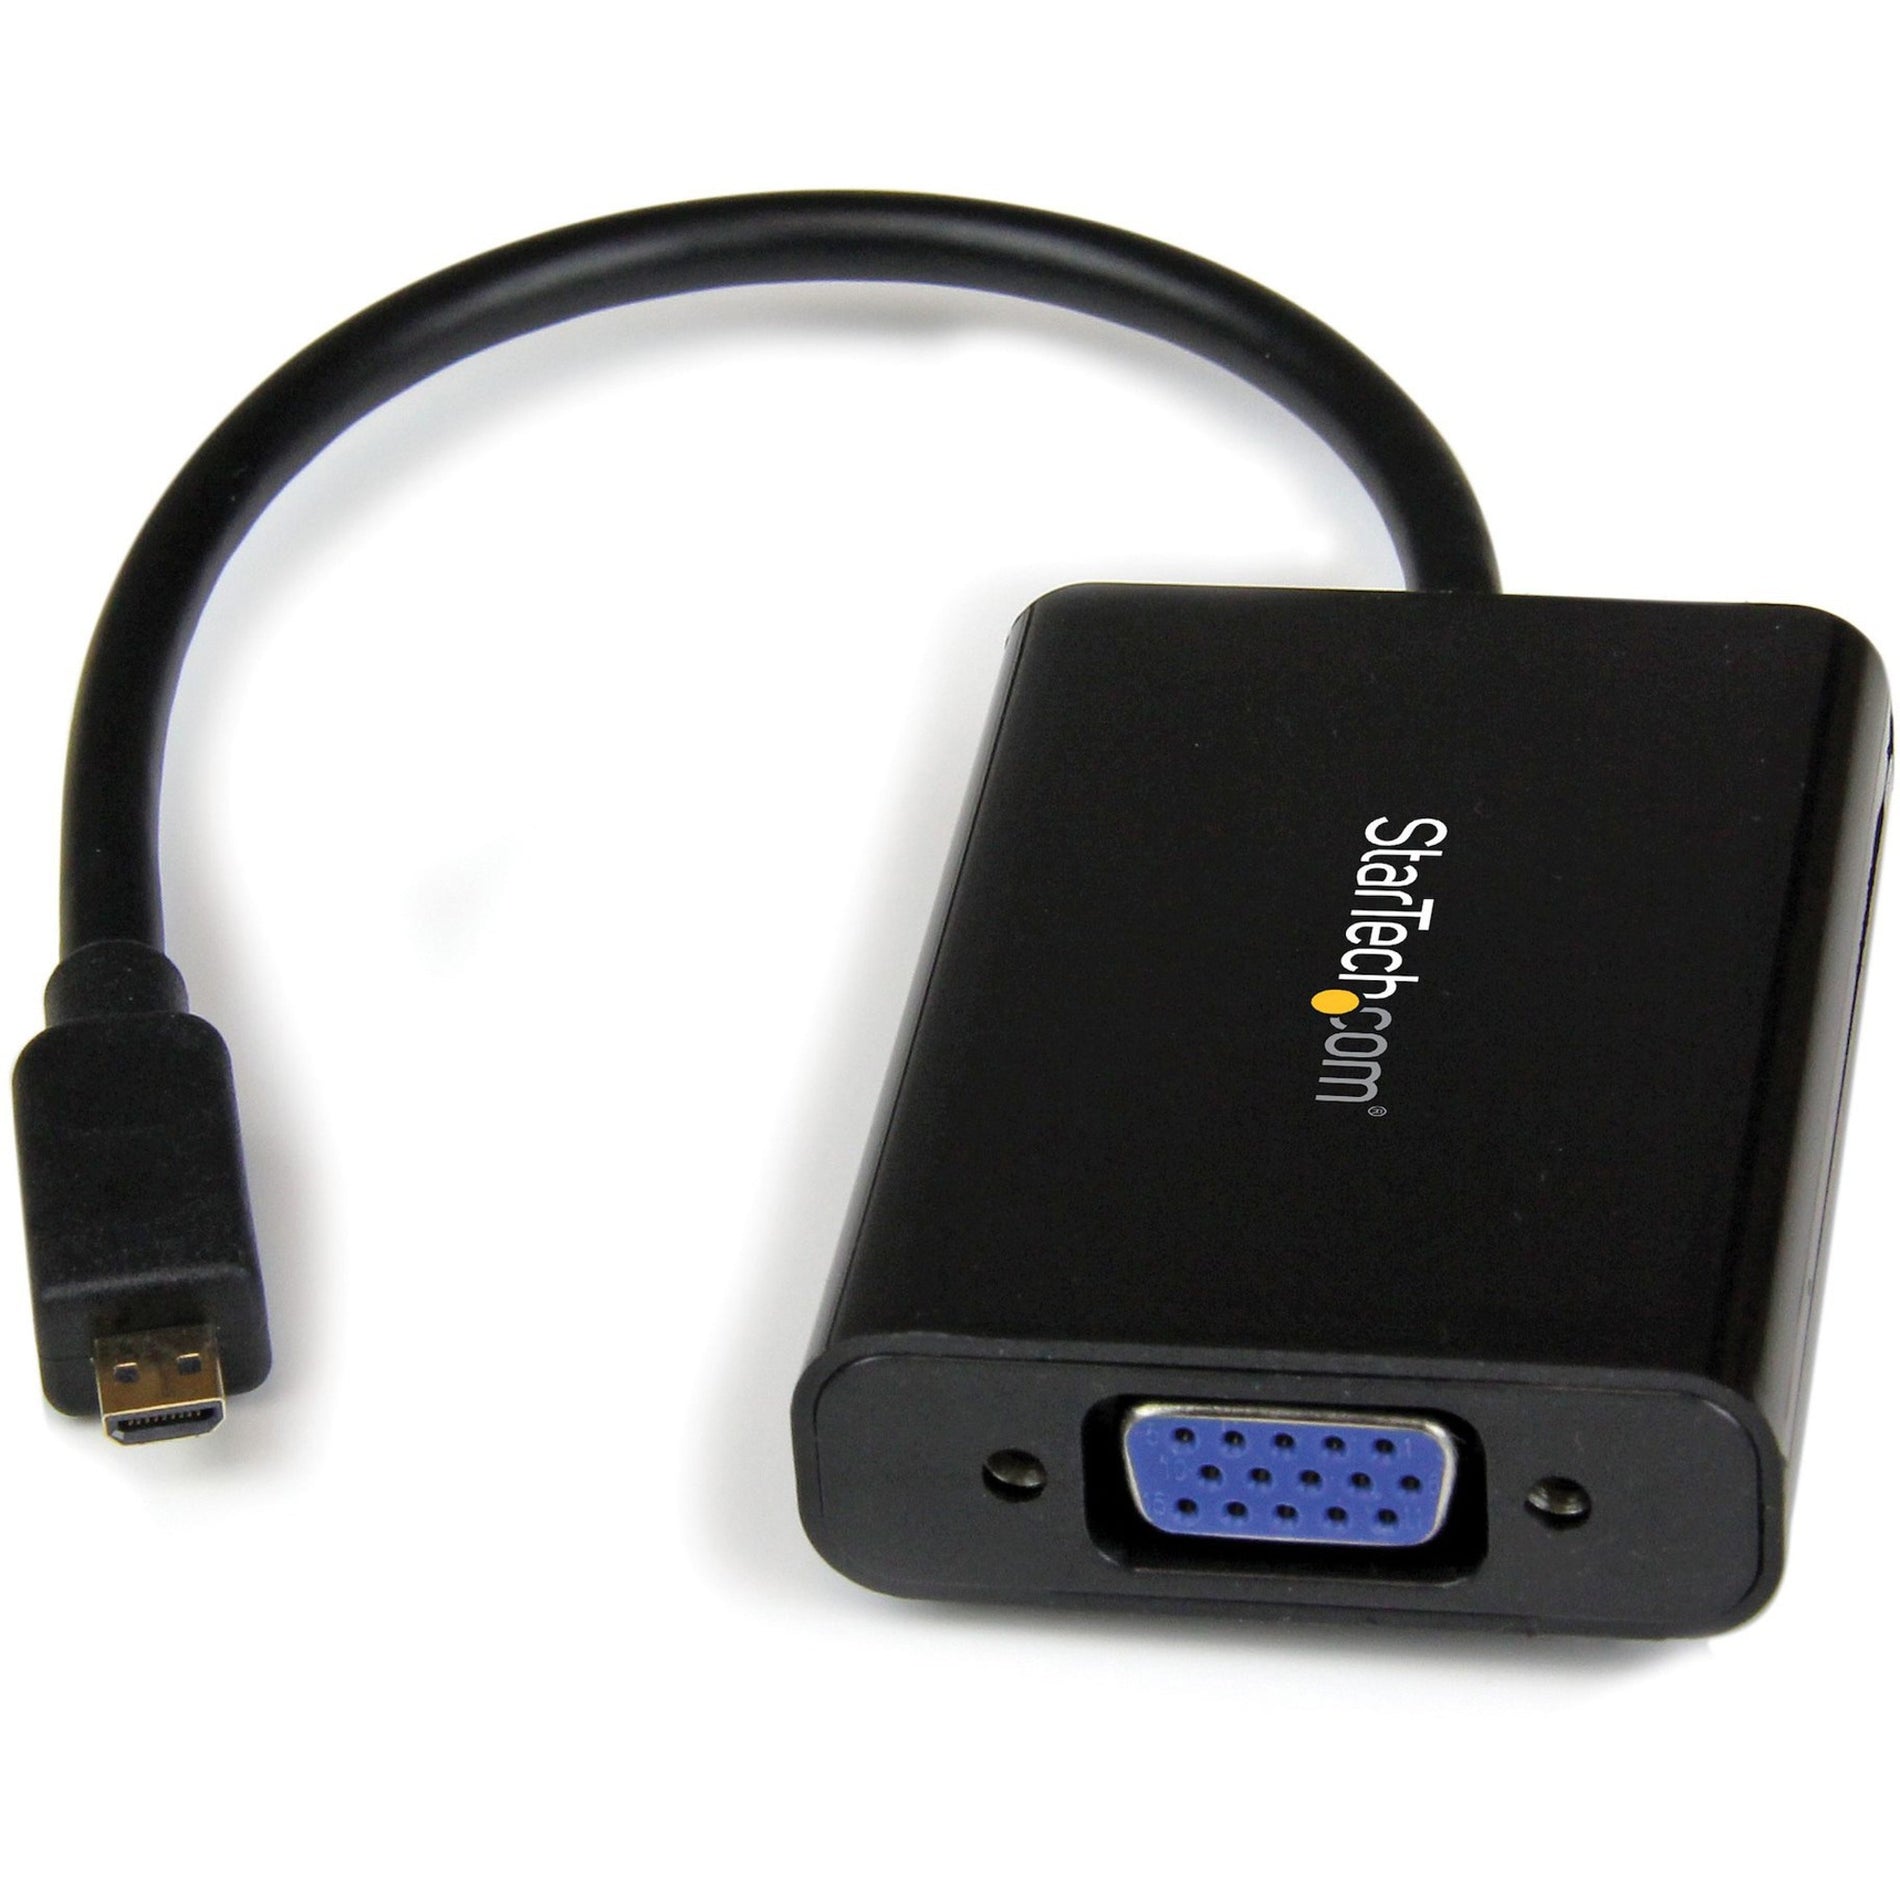 StarTech.com MCHD2VGAA2 محول من مايكرو HDMI إلى VGA، 1920x1200، مع صوت للهواتف الذكية، أجهزة الحوسبة الفائقة، الأجهزة اللوحية